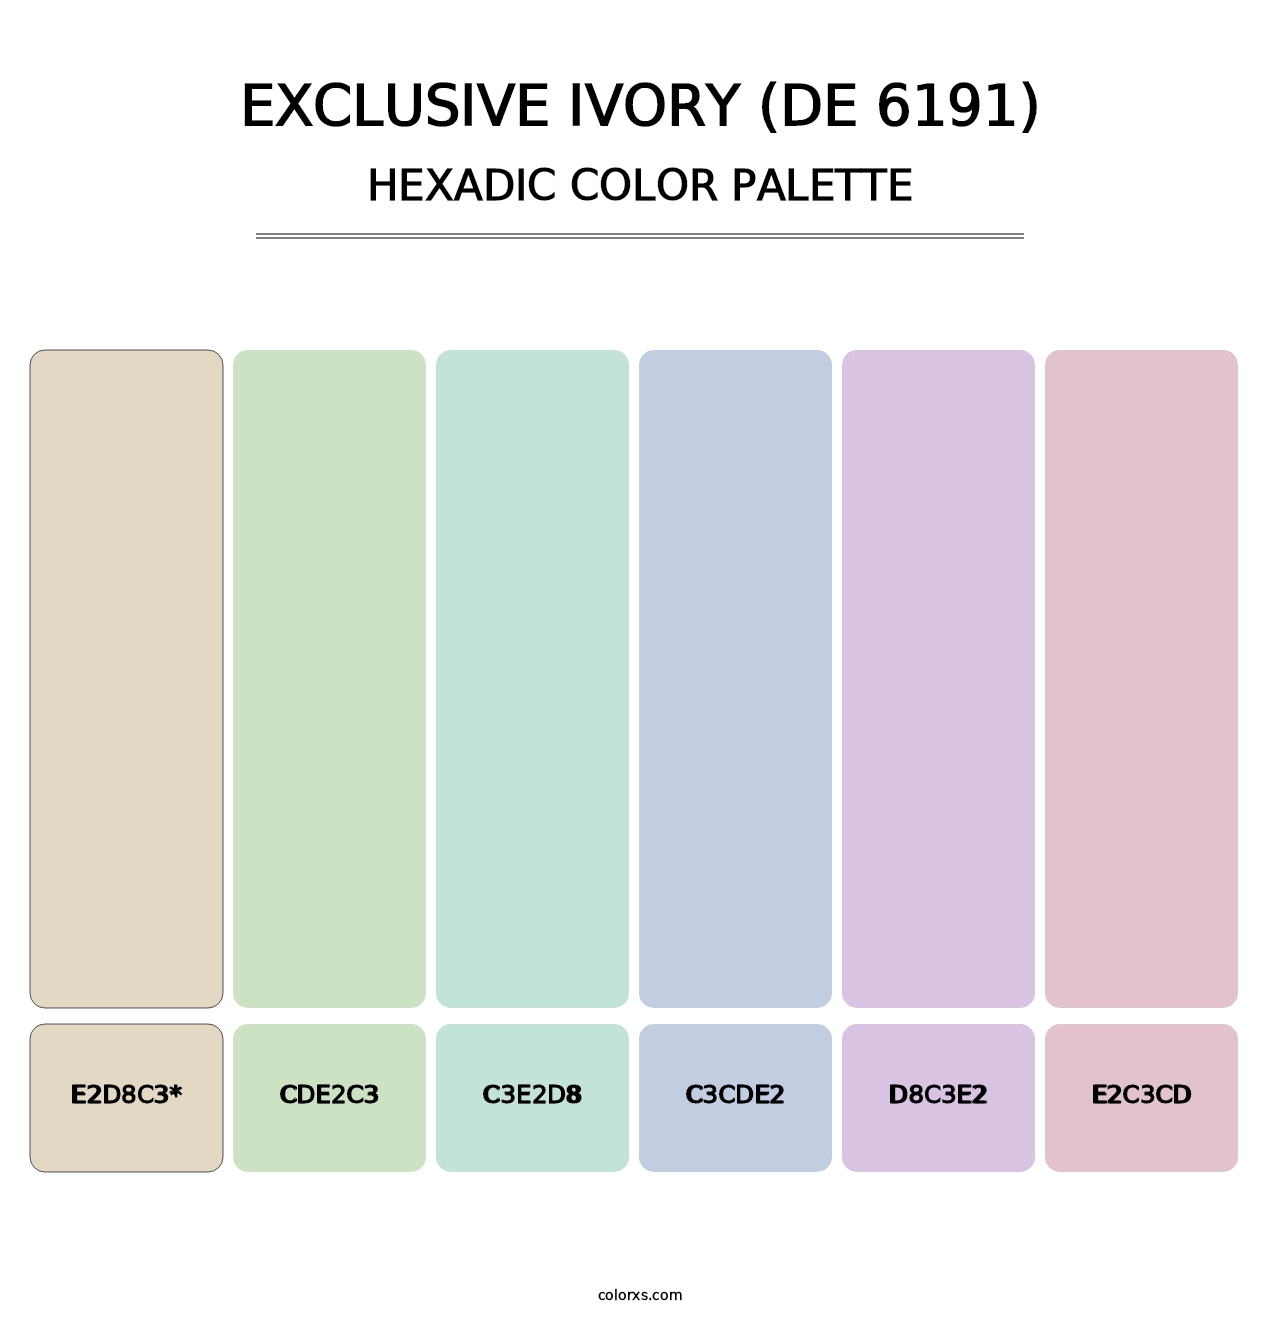 Exclusive Ivory (DE 6191) - Hexadic Color Palette